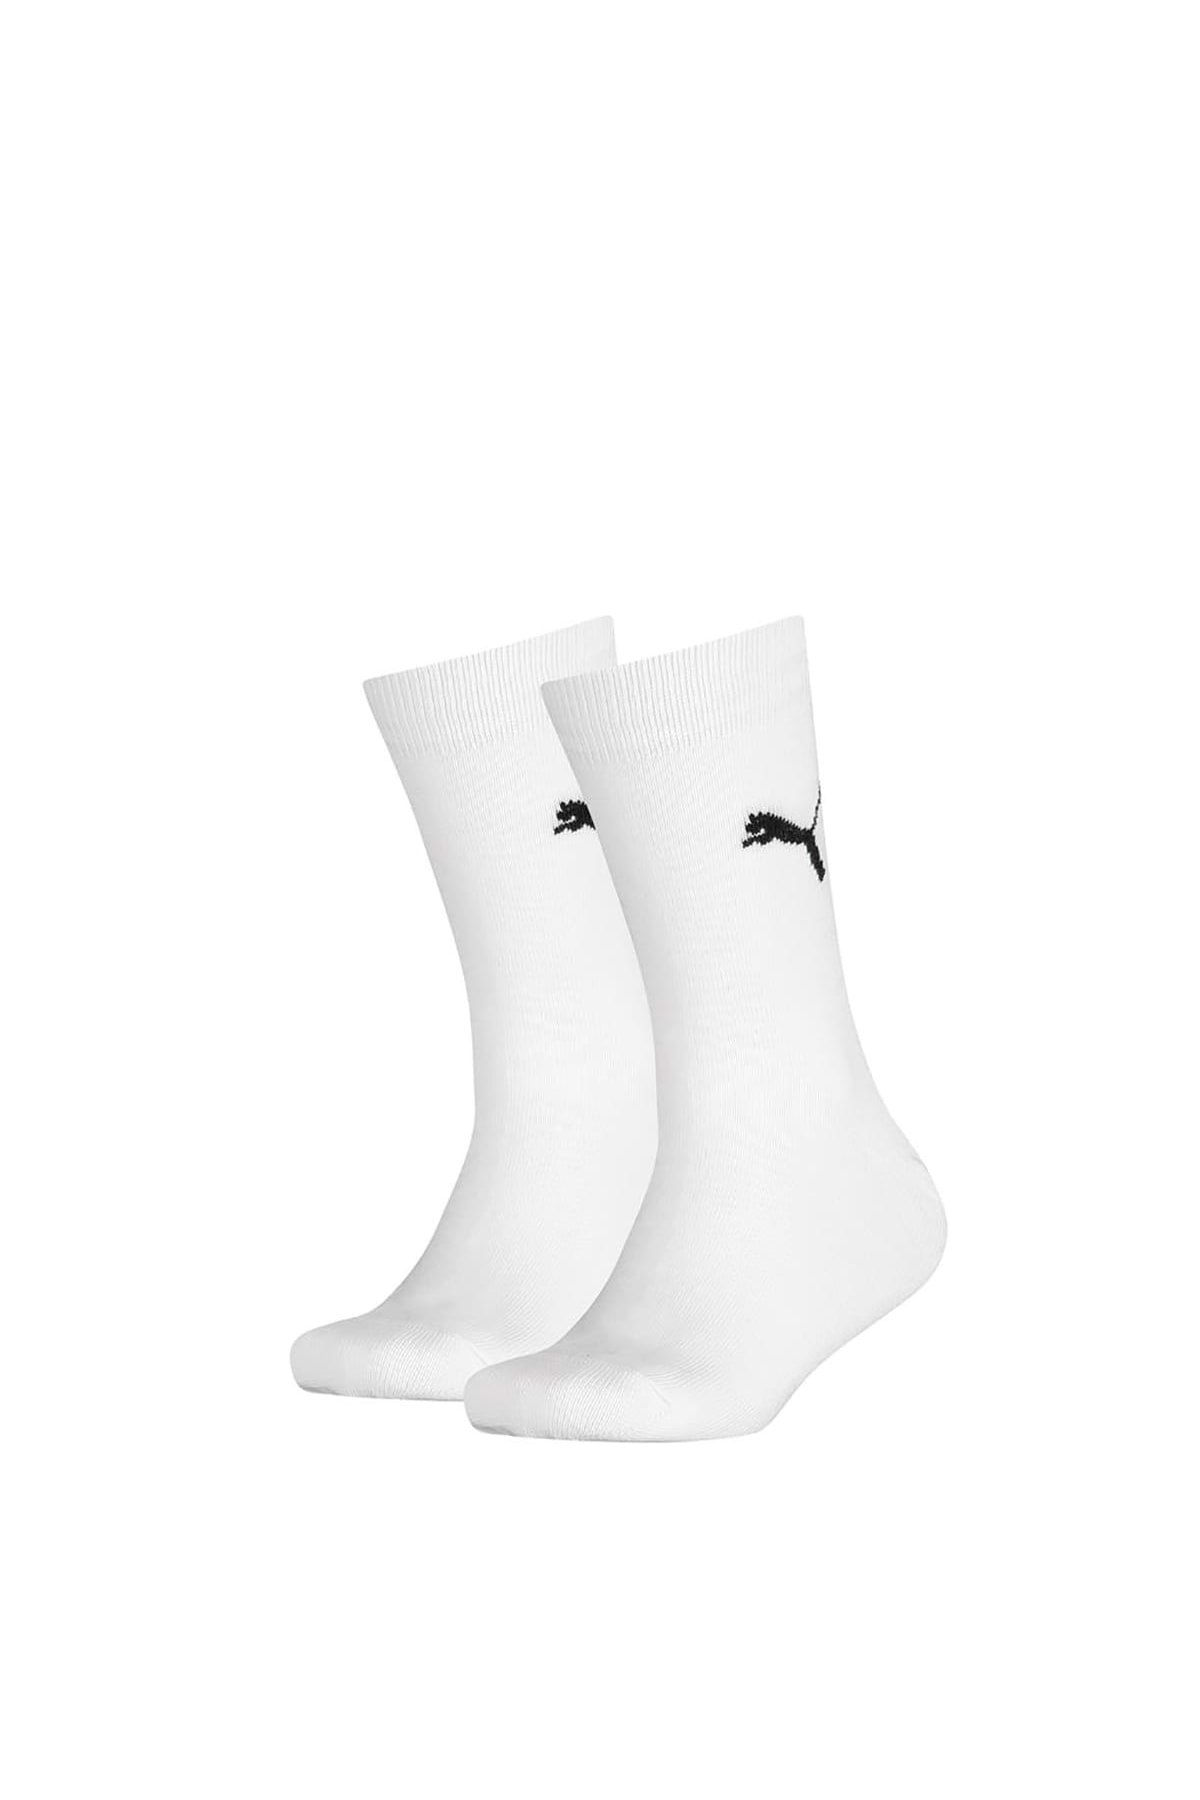 Puma Socken Weiß Casual